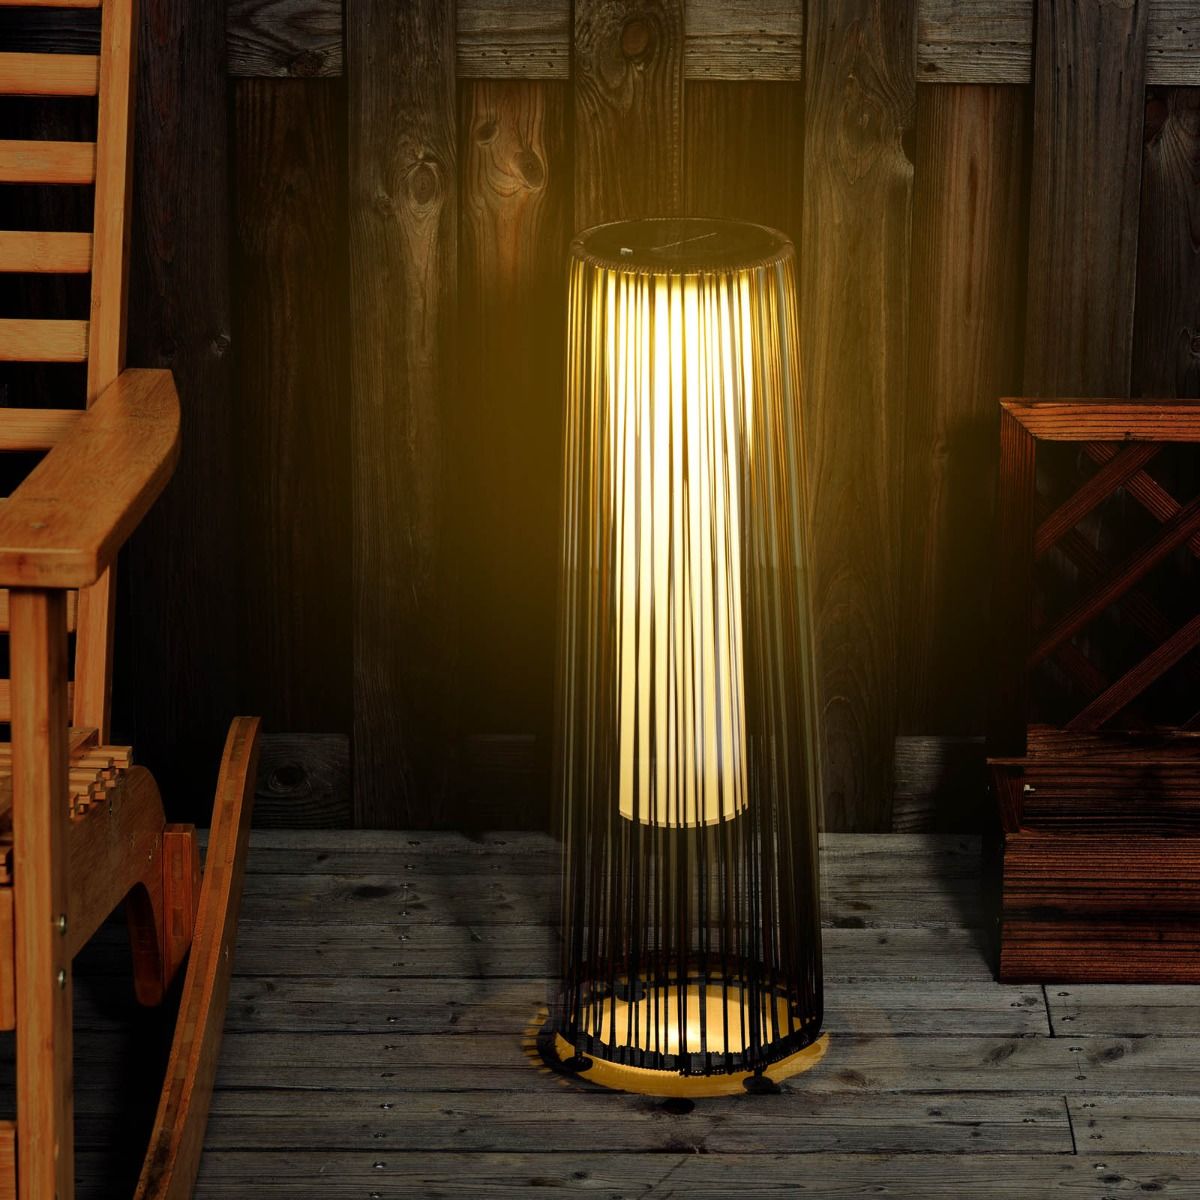 Outsunny Woven Resin Wicker Outdoor Solar Lantern Light - Brown